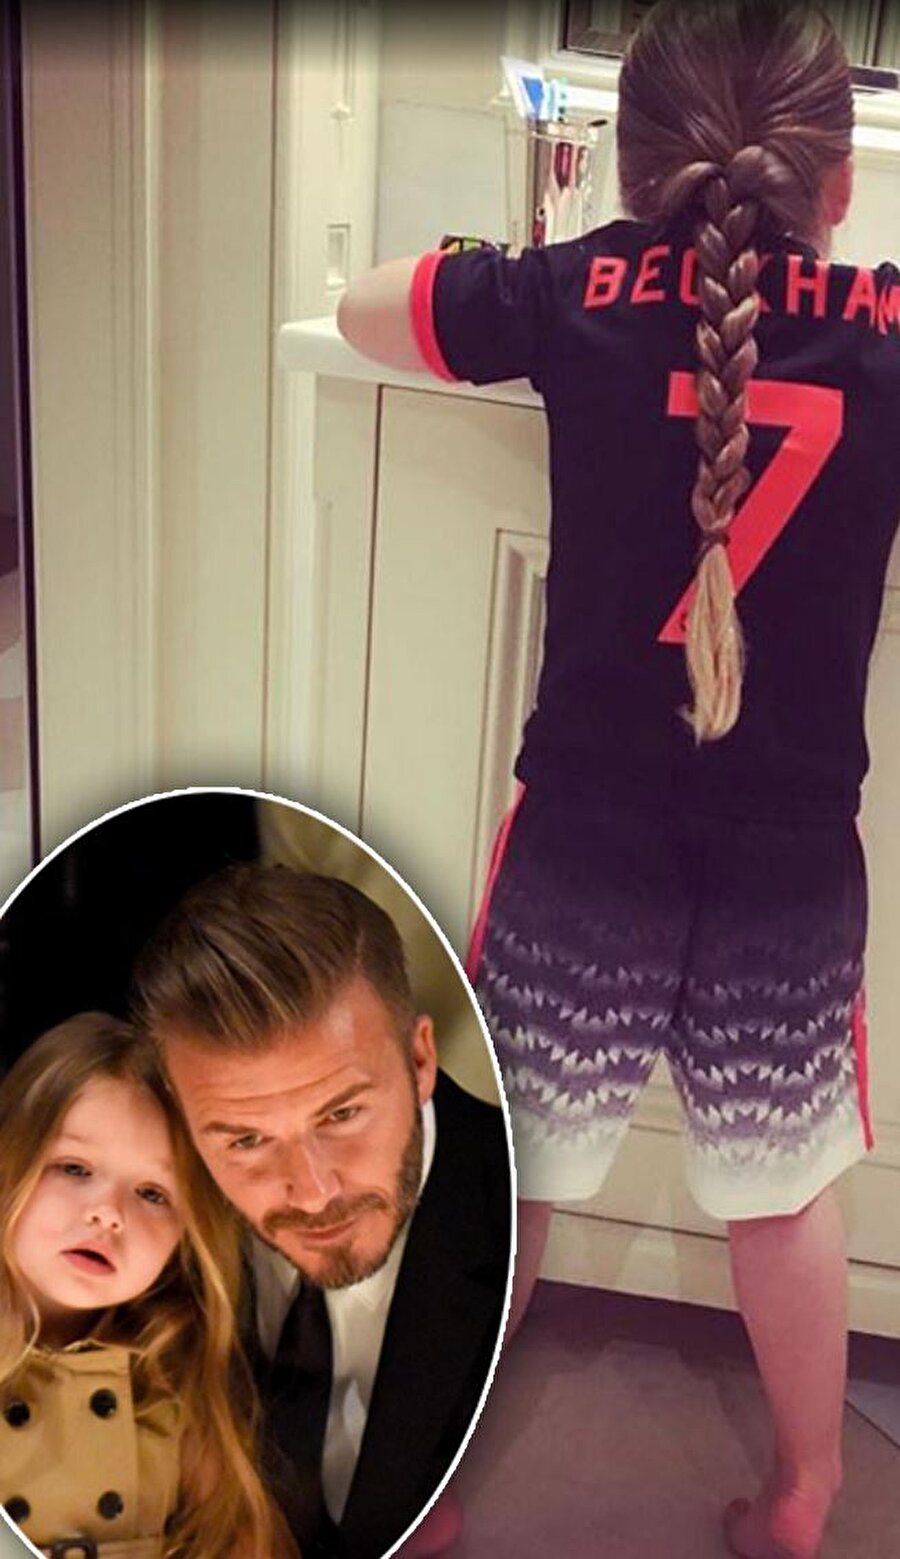 Harper Seven Beckham
David Beckham ve Victoria Beckham'ın kızı.